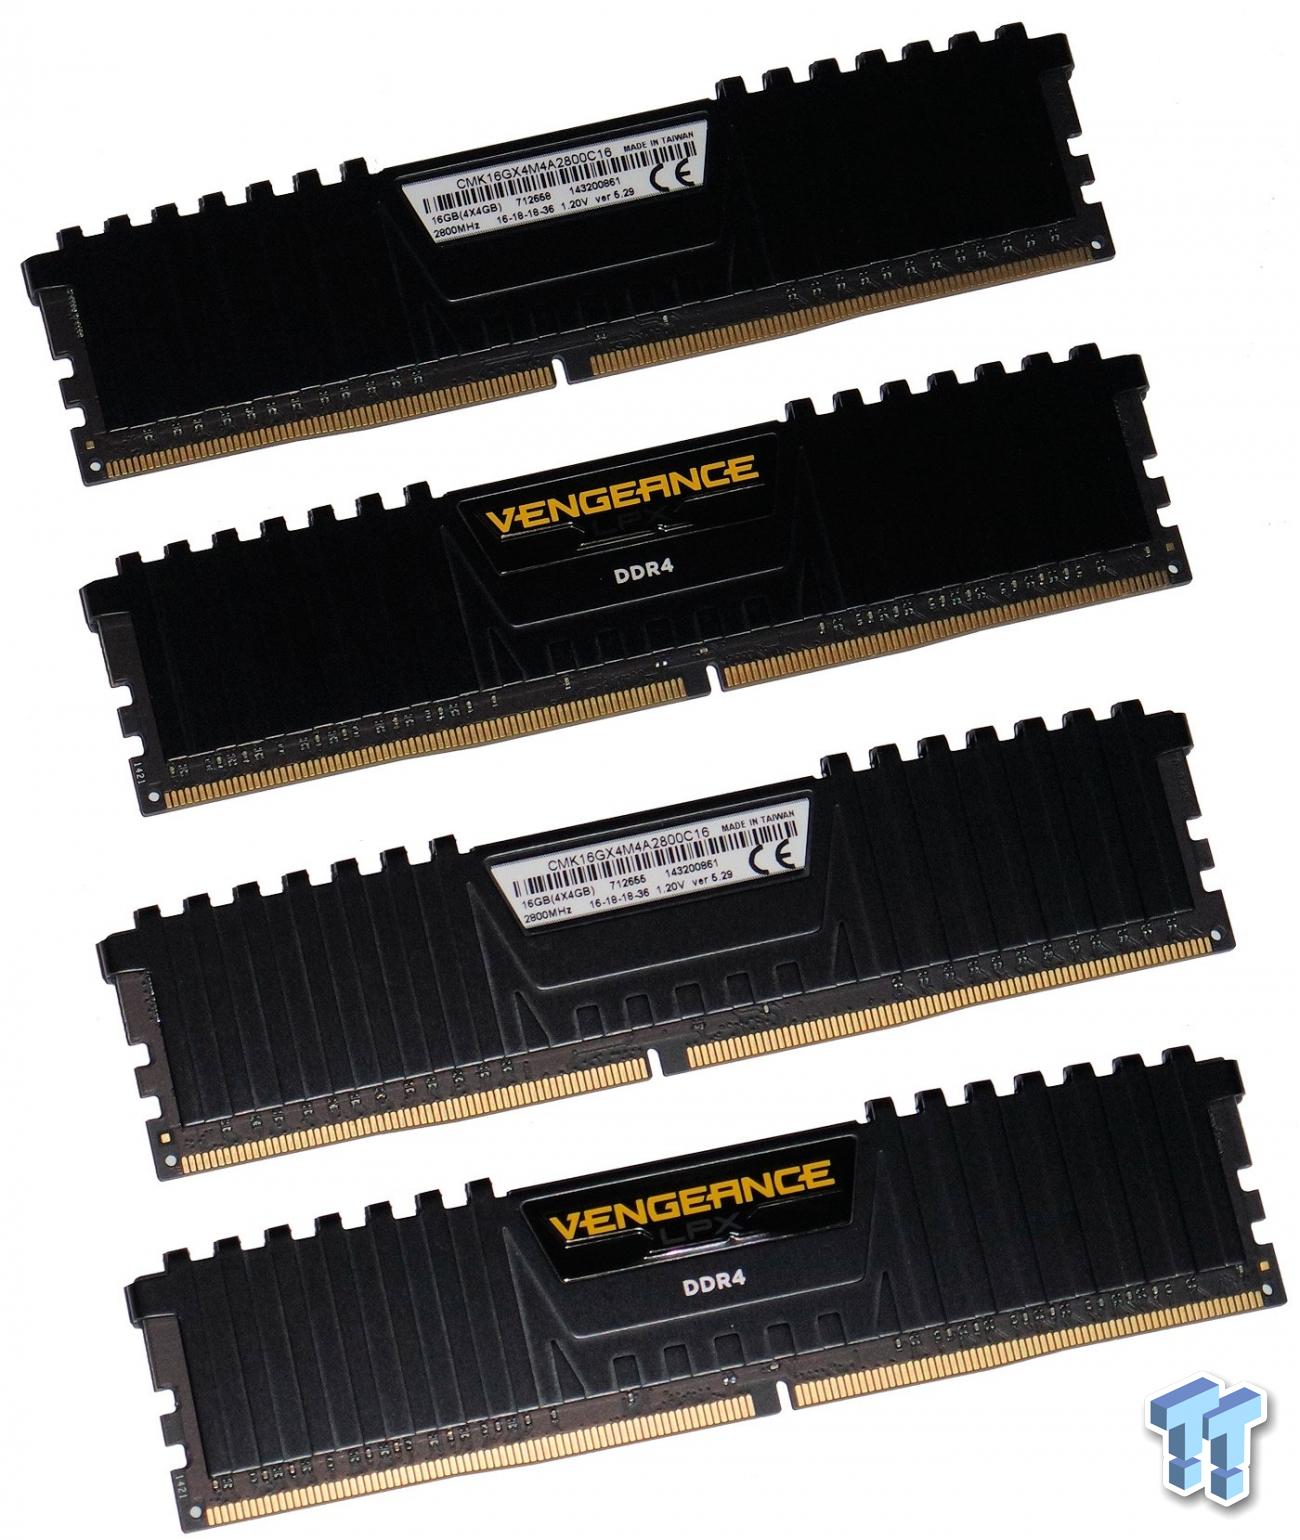 hinanden Behov for kærtegn Corsair Vengeance LPX 16GB DDR4-2800 Quad-Channel Memory Kit Review